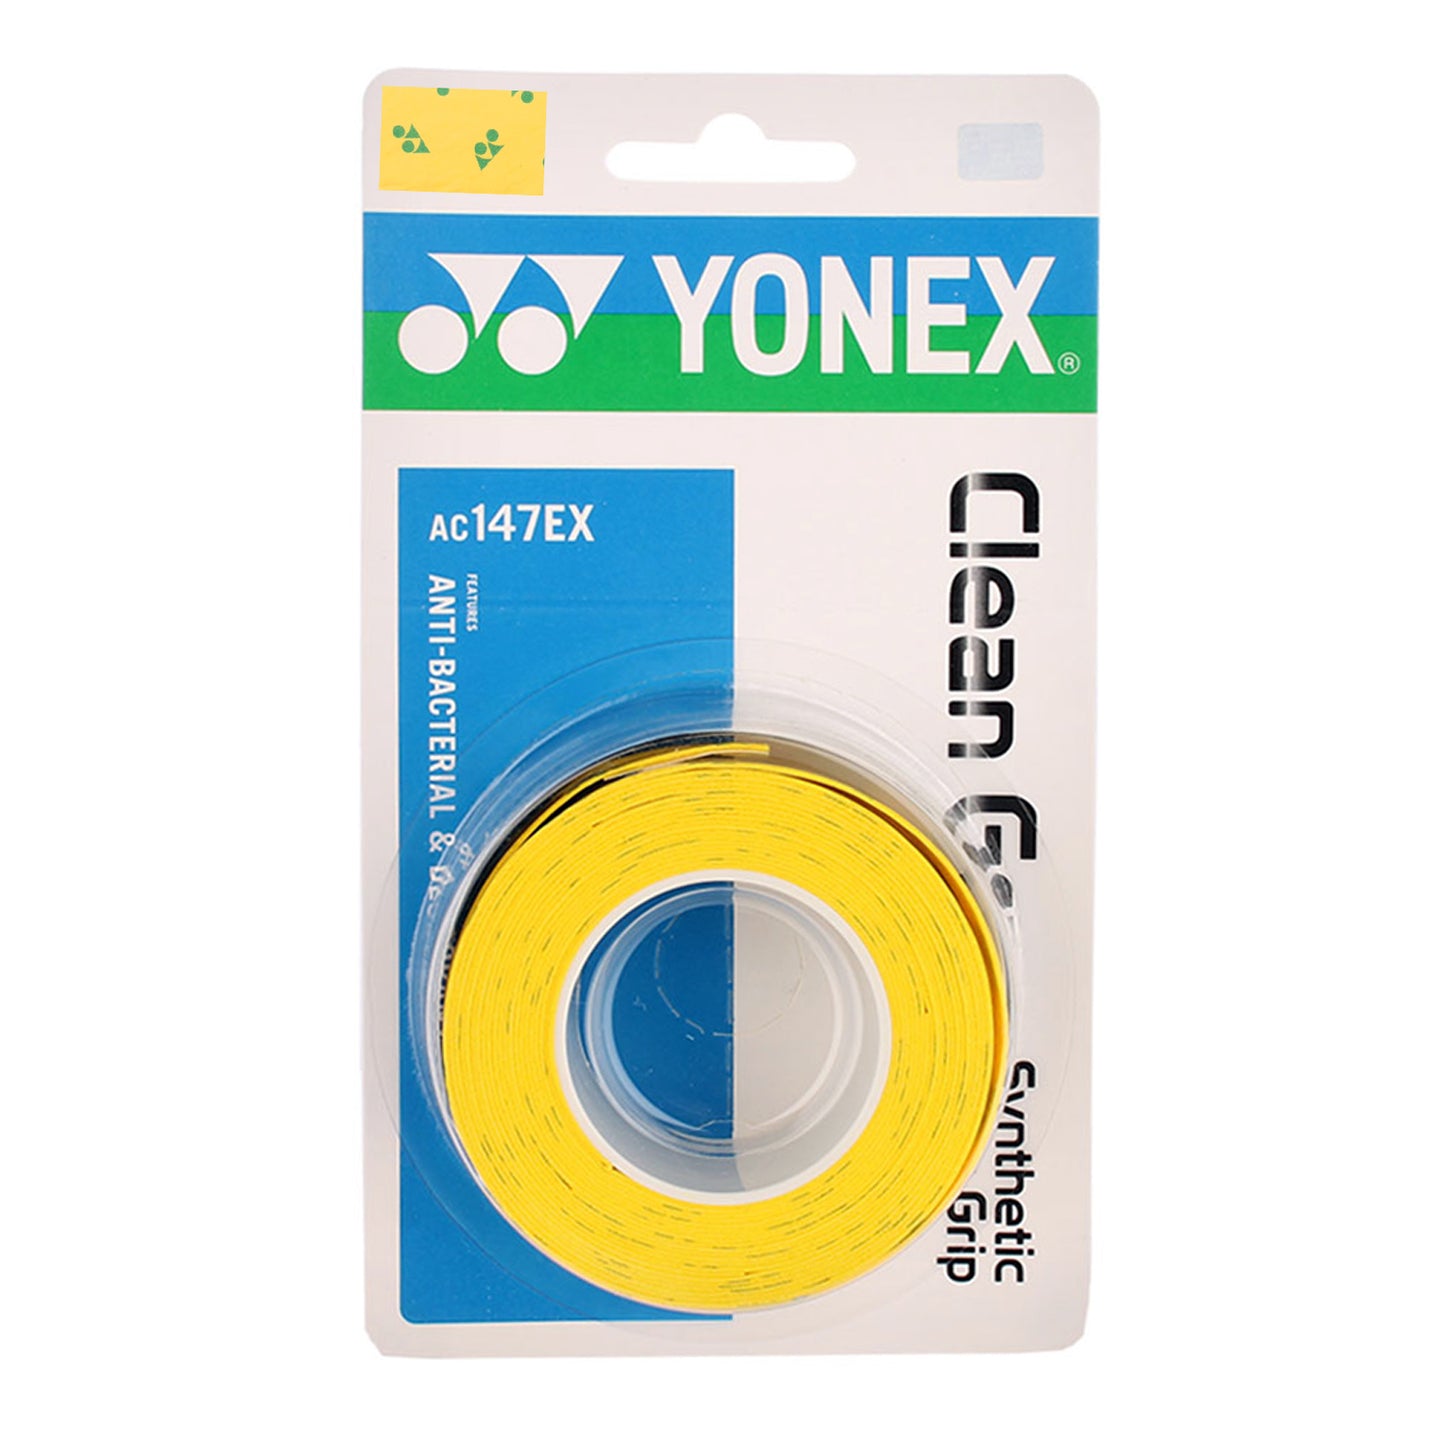 Yonex AC147EX Clean Grap Synthetic Badminton Over Grip - Best Price online Prokicksports.com